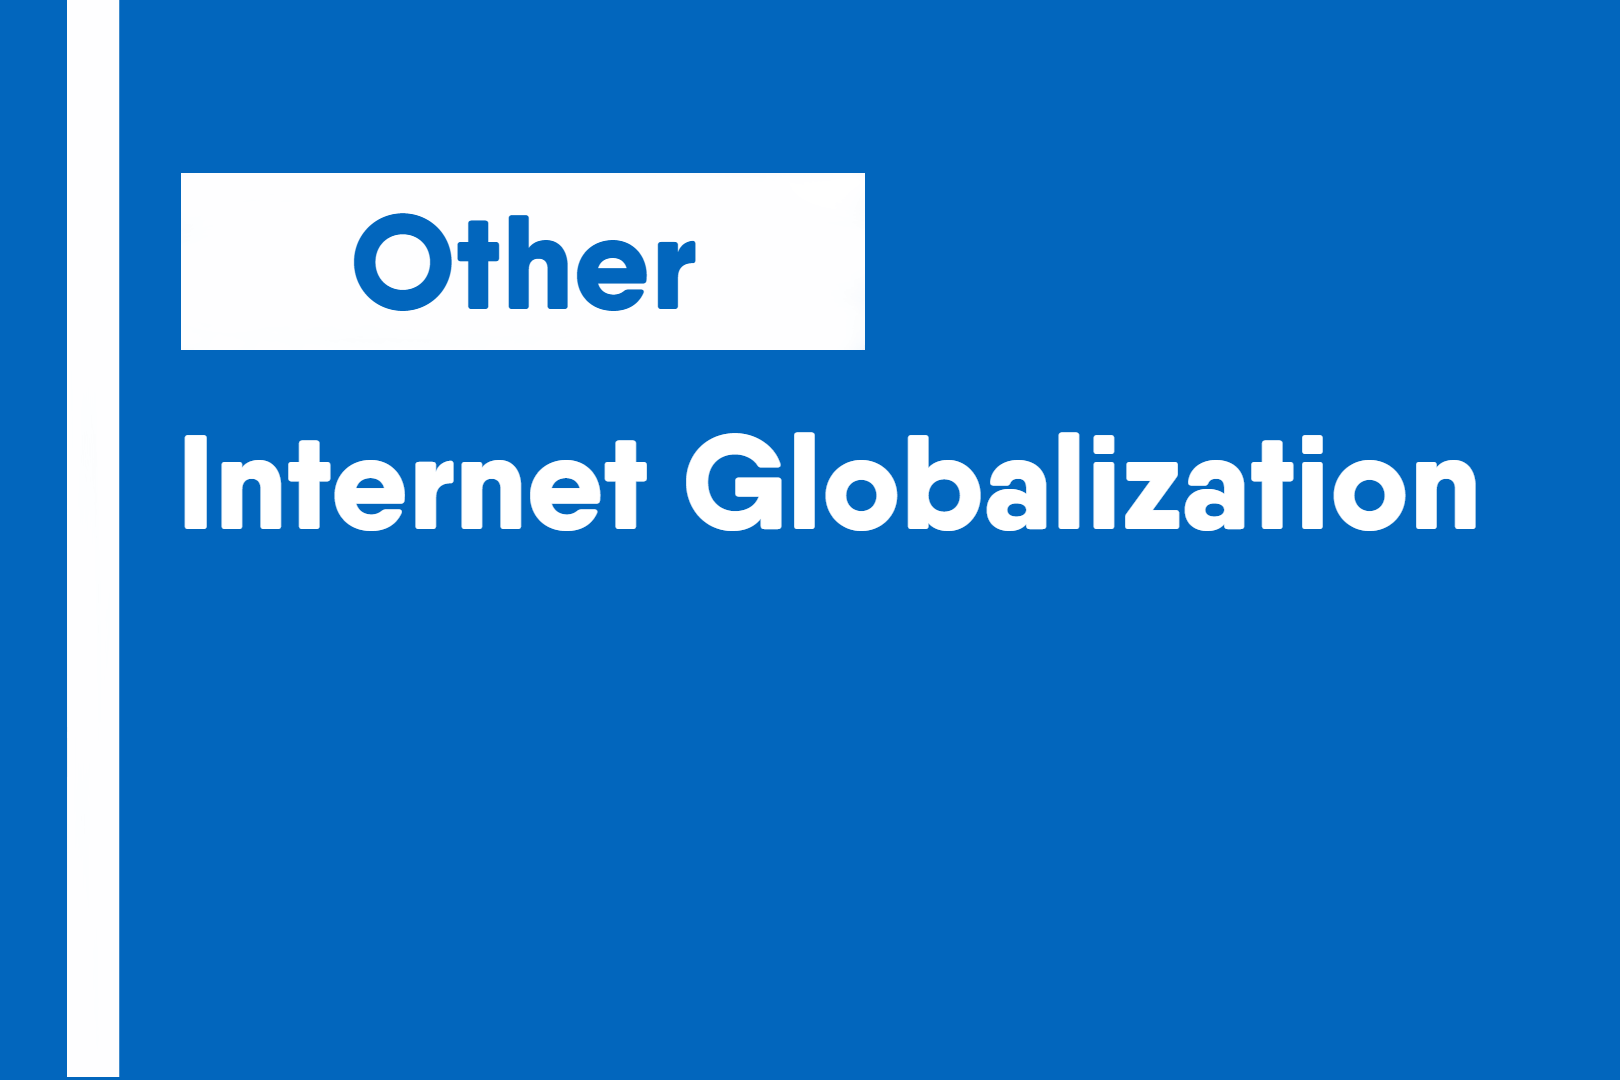 Internet Globalization